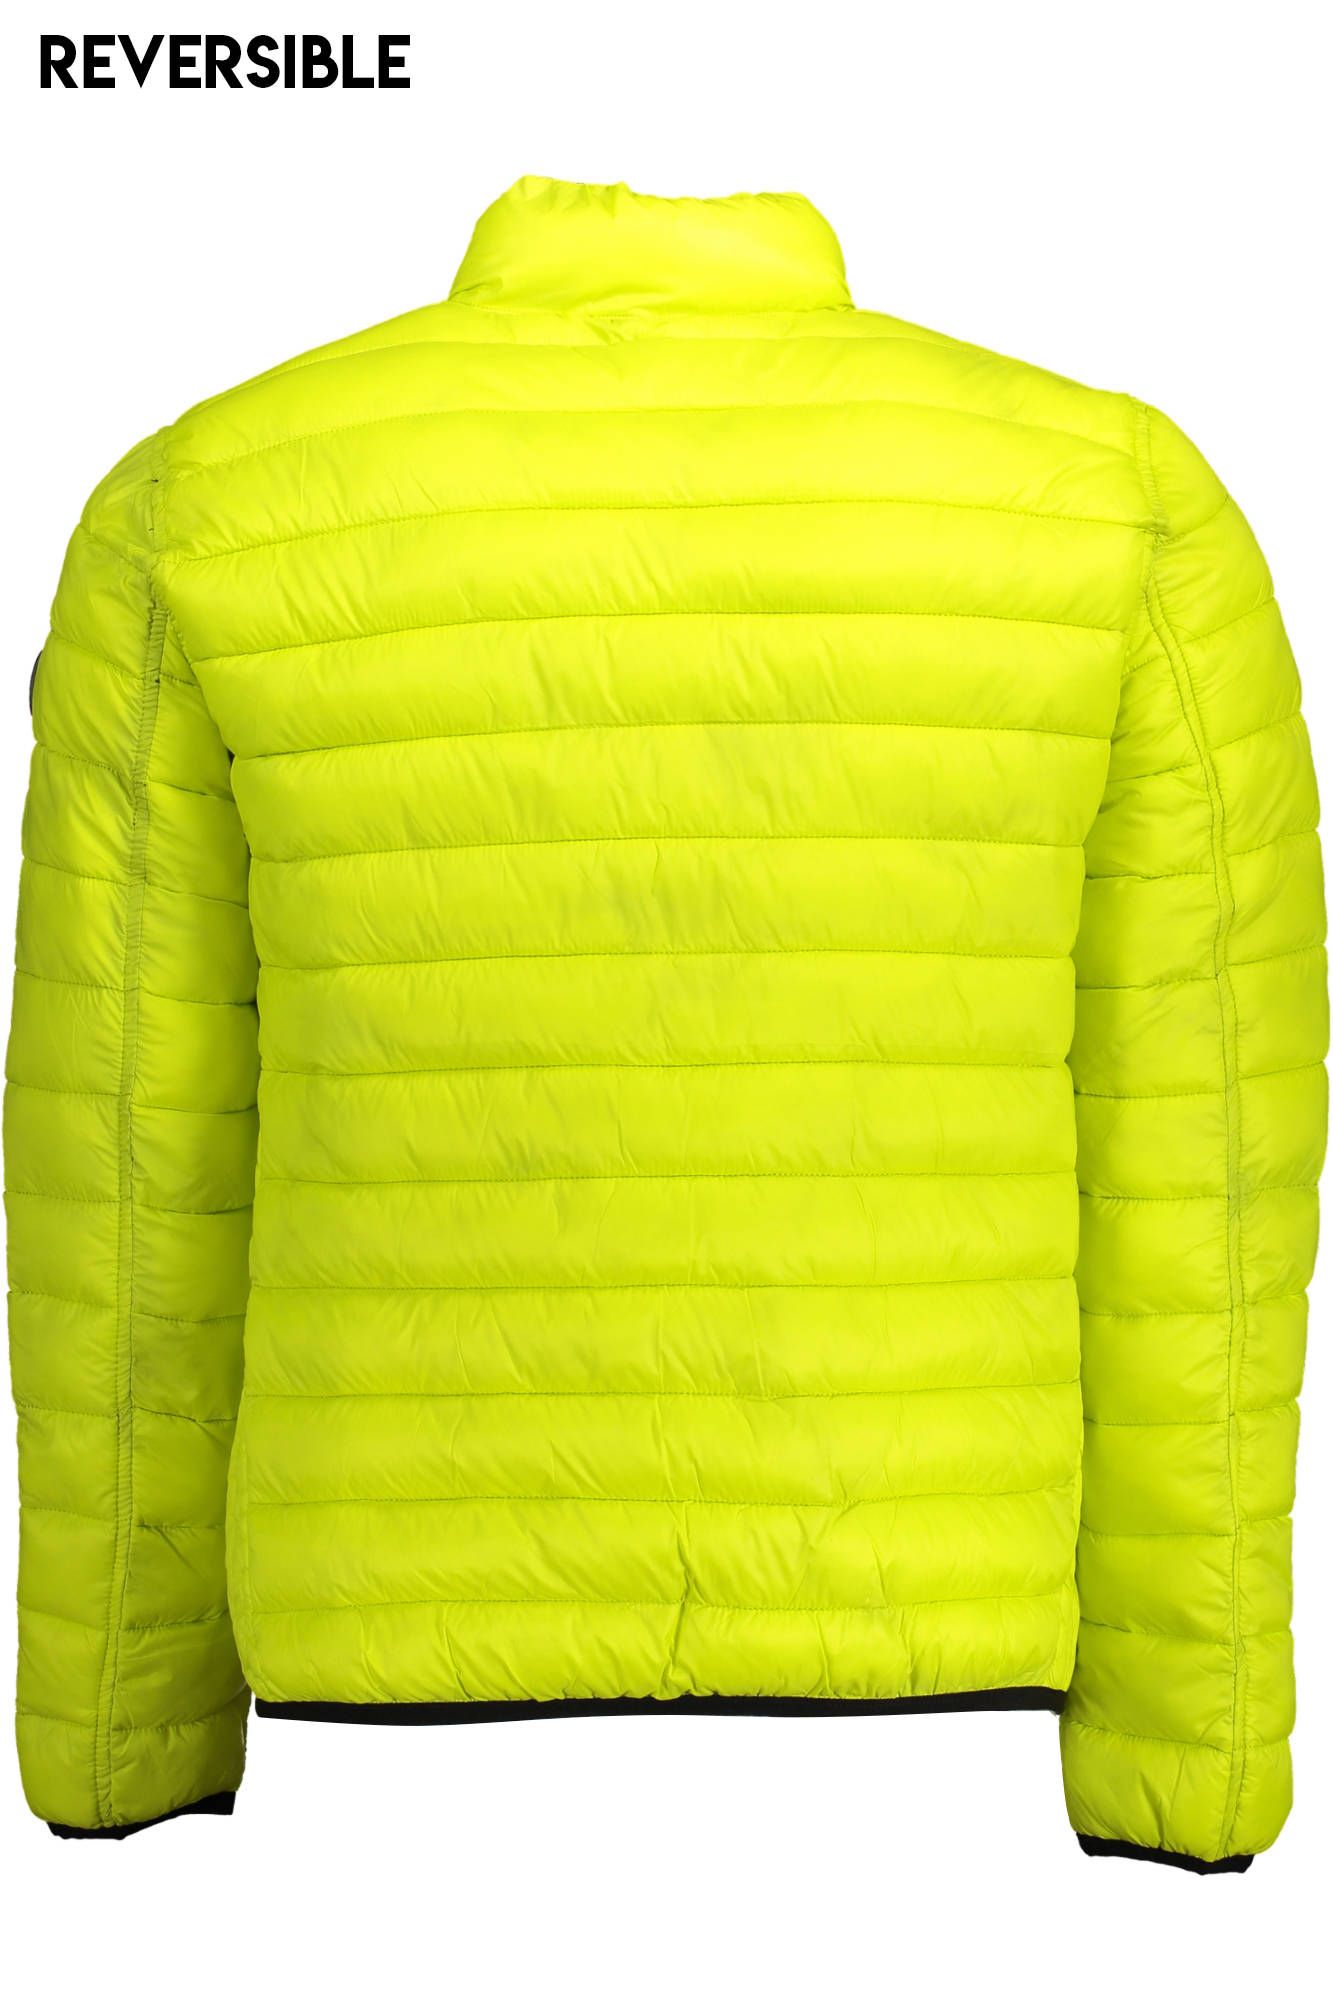 U.S. Polo Assn. Yellow Nylon Jacket